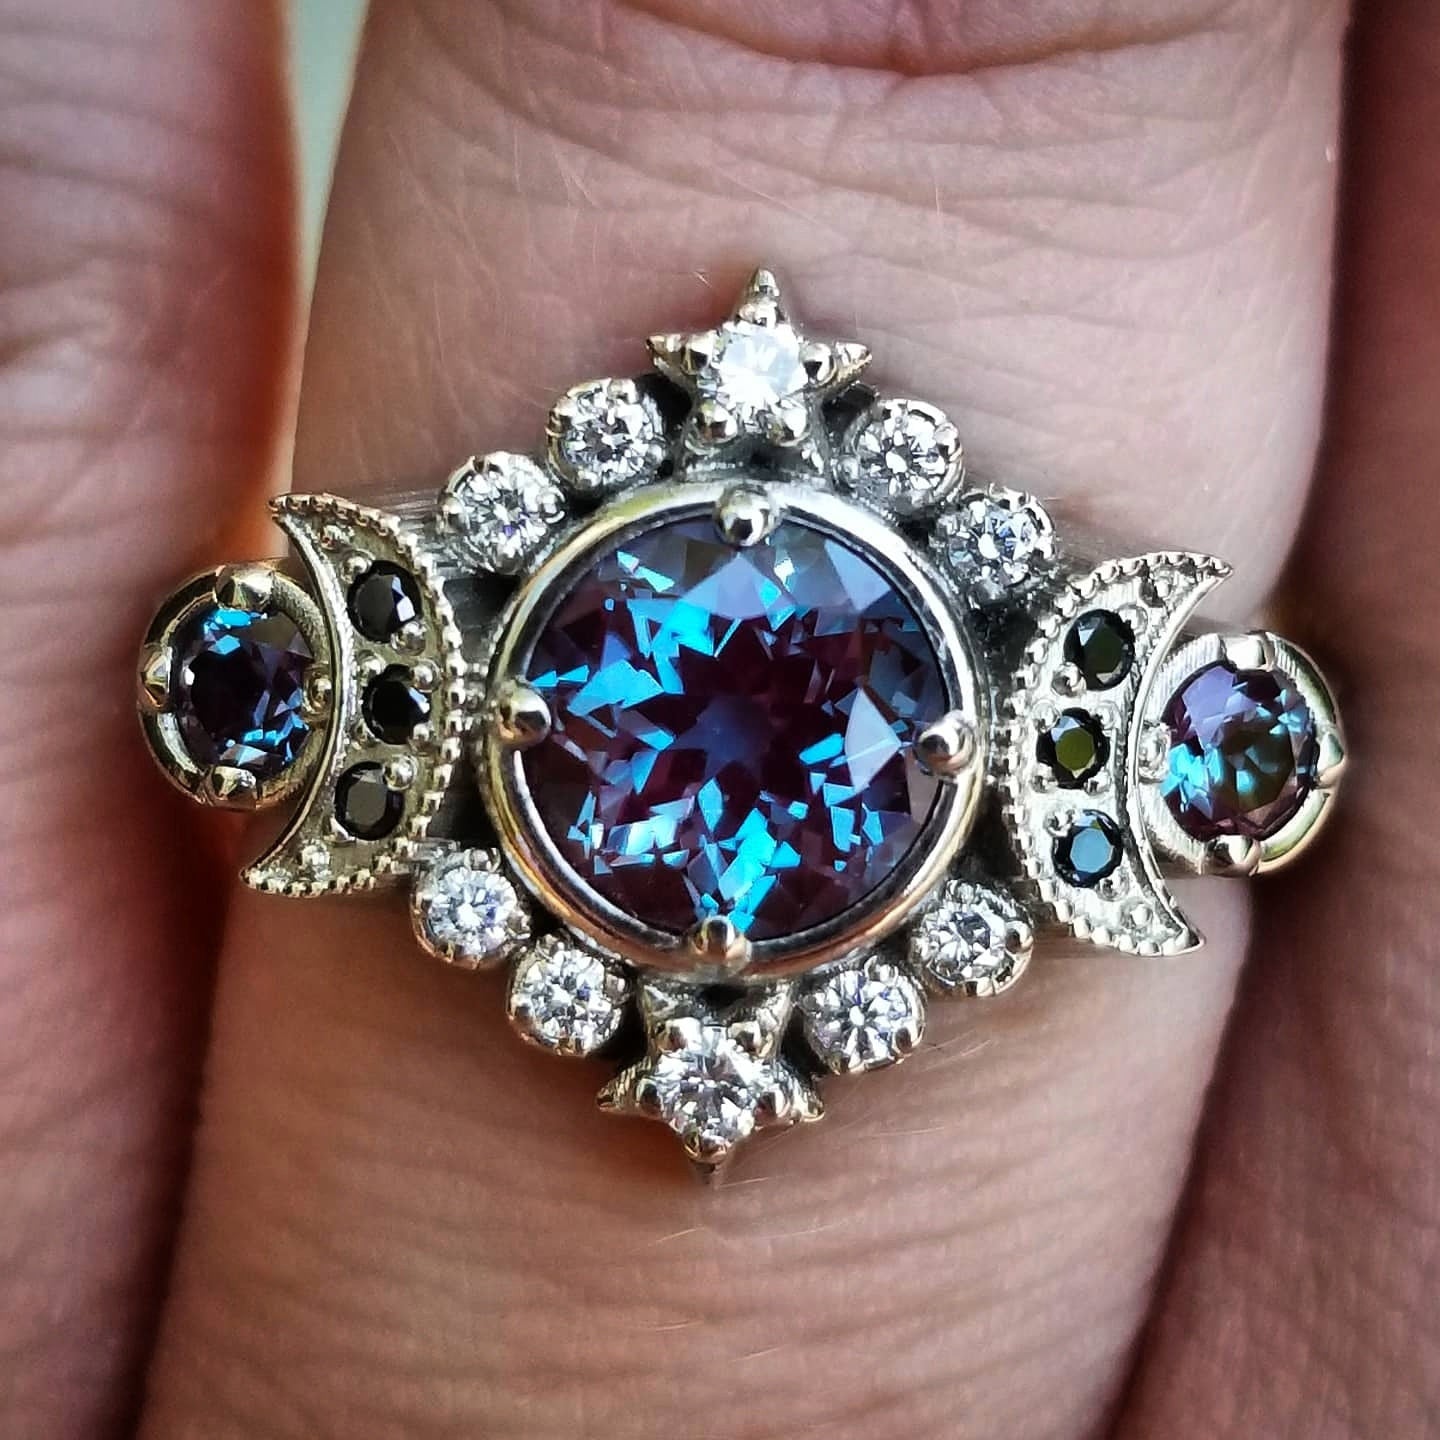 Selene Moon Ring - Chatham Alexandrite with Black and White Diamonds - 14k Palladium White Gold - Unique Boho Engagement Ring